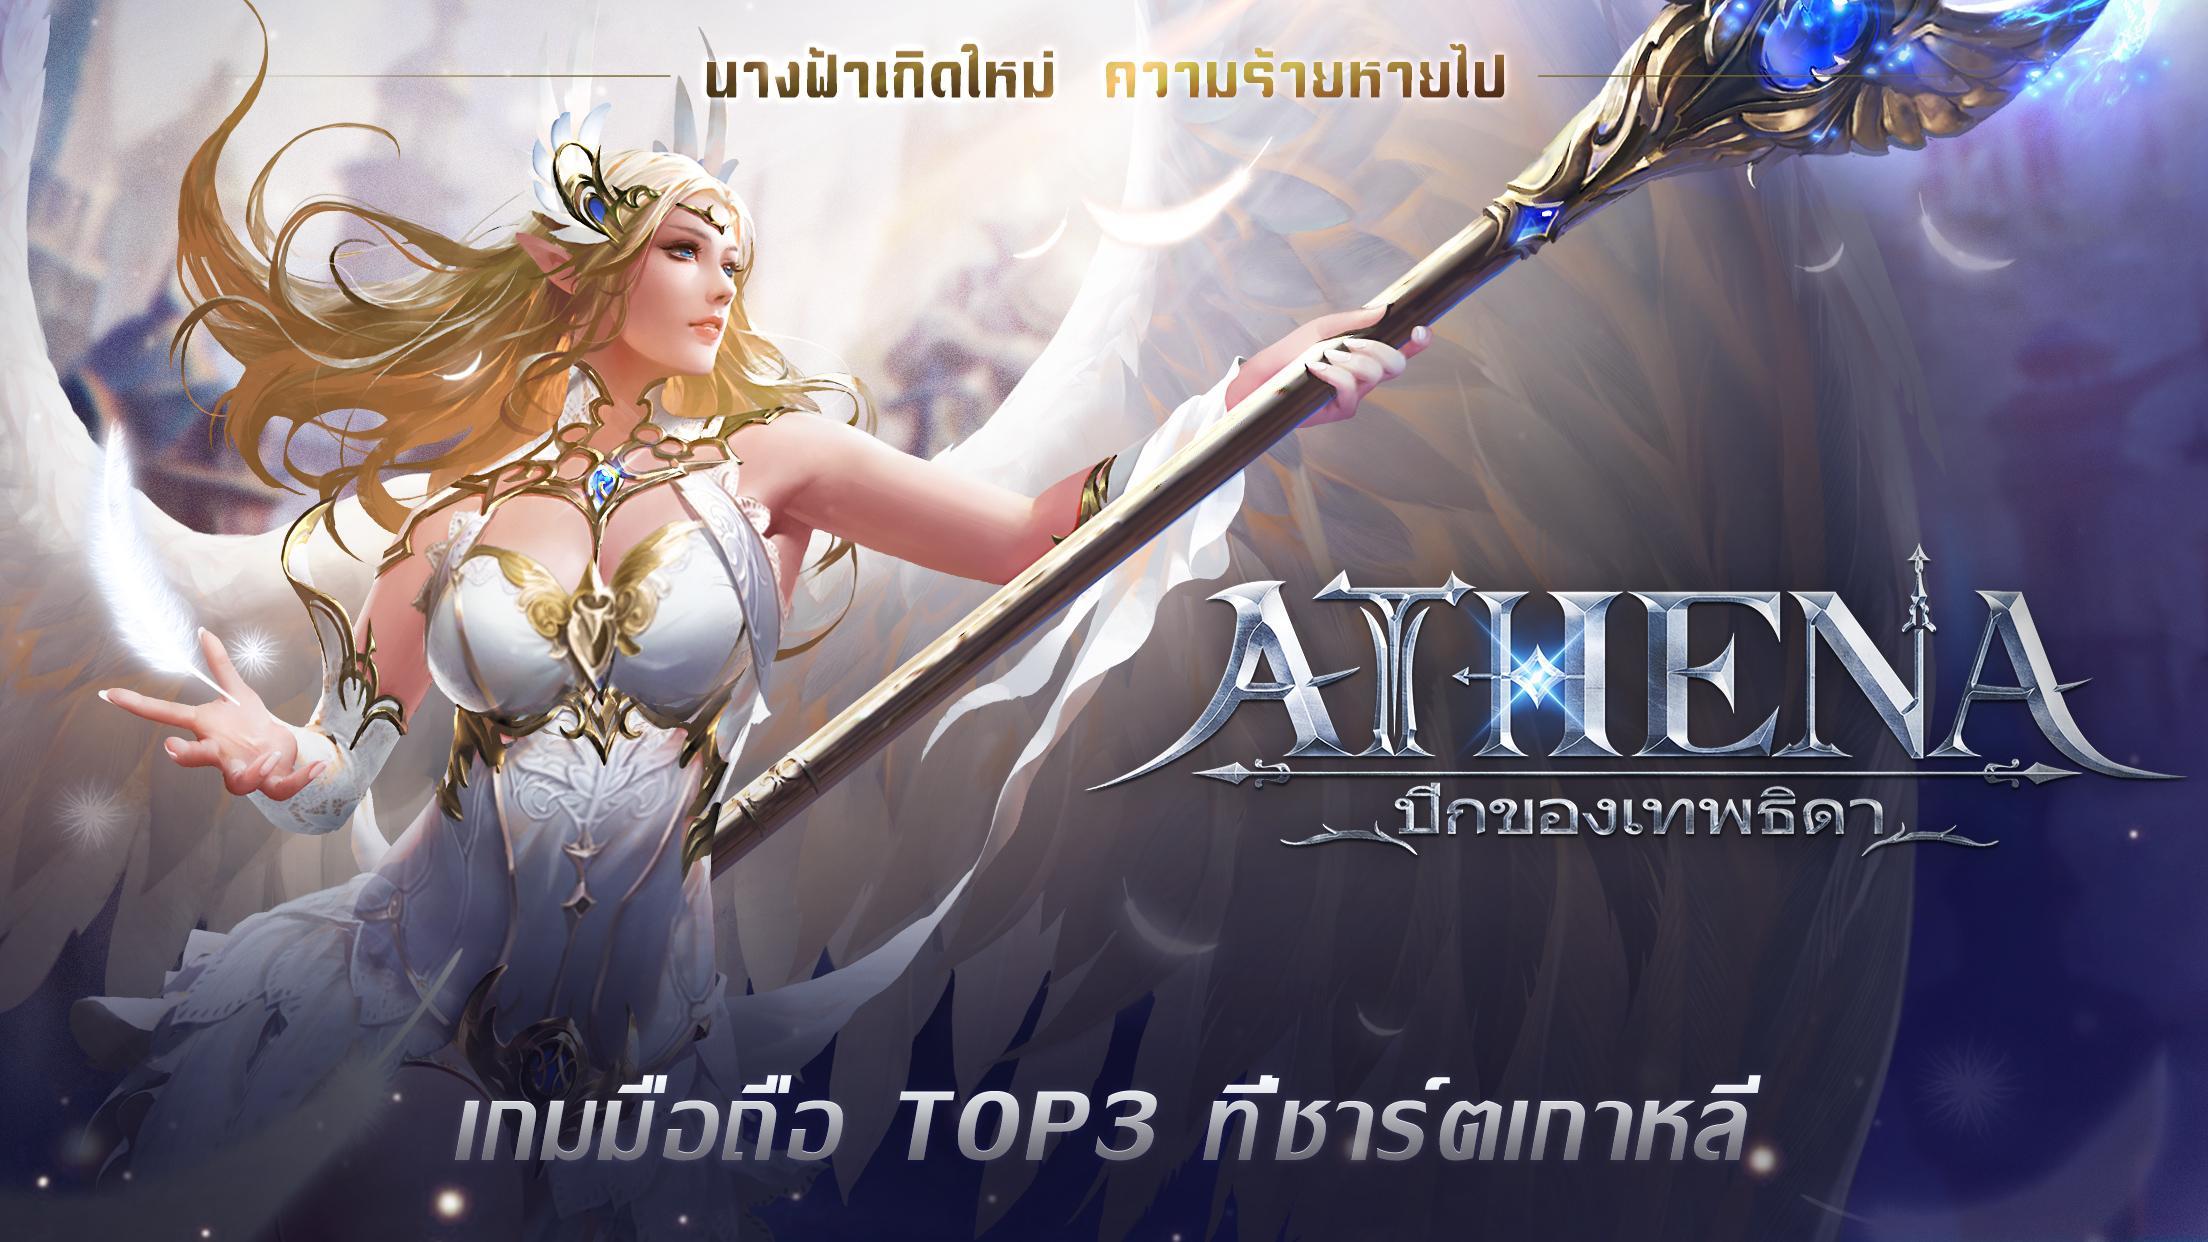 Screenshot 1 of Athena (Sayap Dewi) 1.5.70.2012